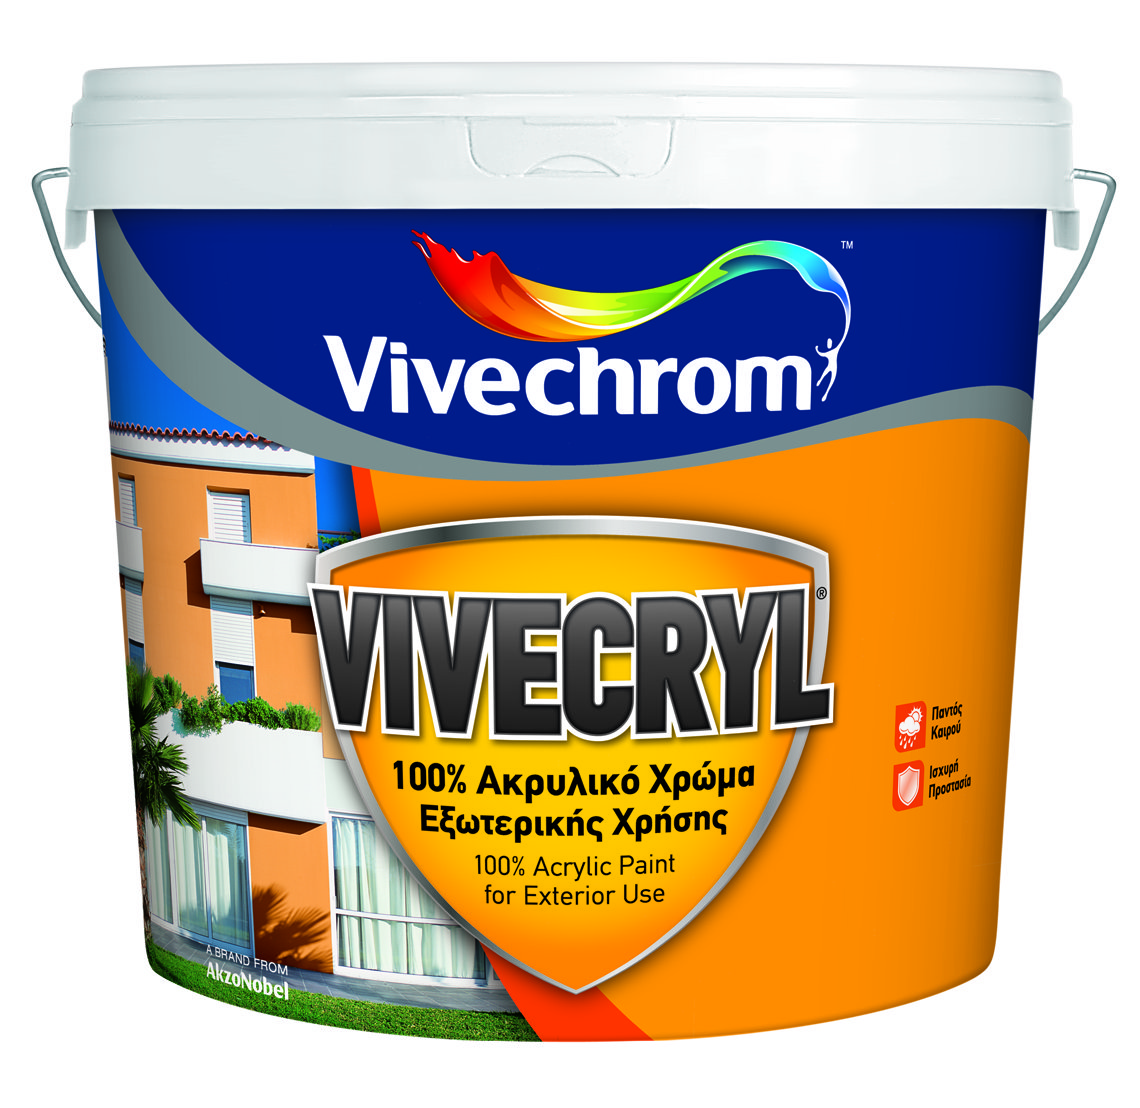 Vivechrom Vivecryl Ακρυλικό Οικολογικό Χρώμα Matt Finish Βάση D 3L